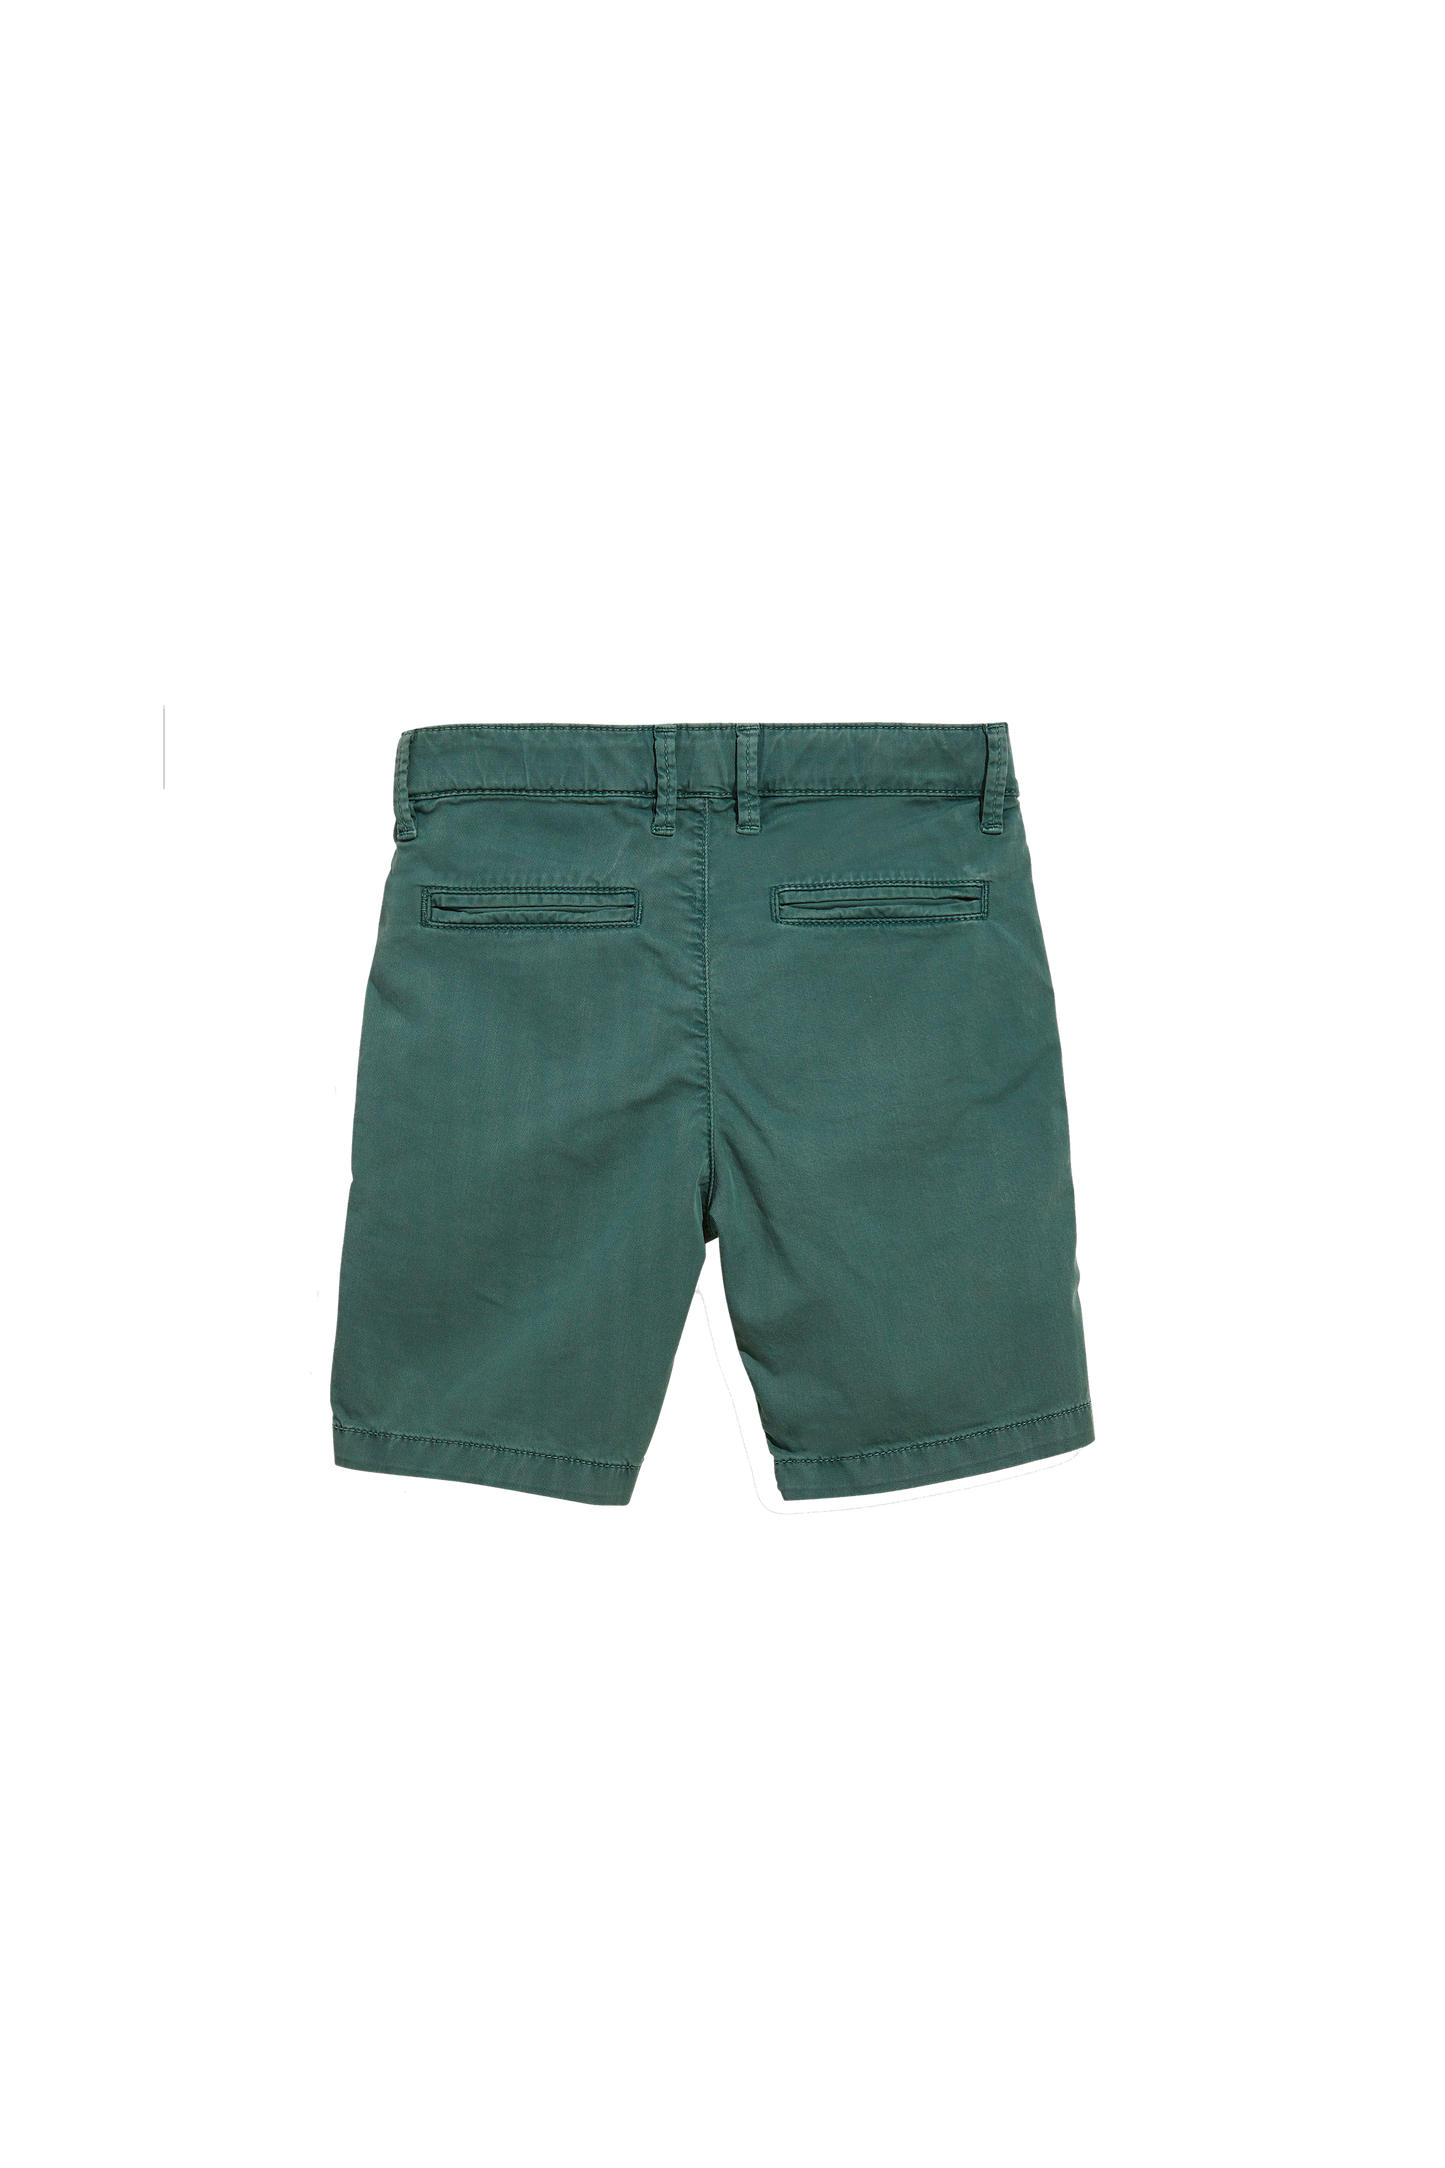 ALLEN Green Khaki - Chino Fit Bermuda Shorts